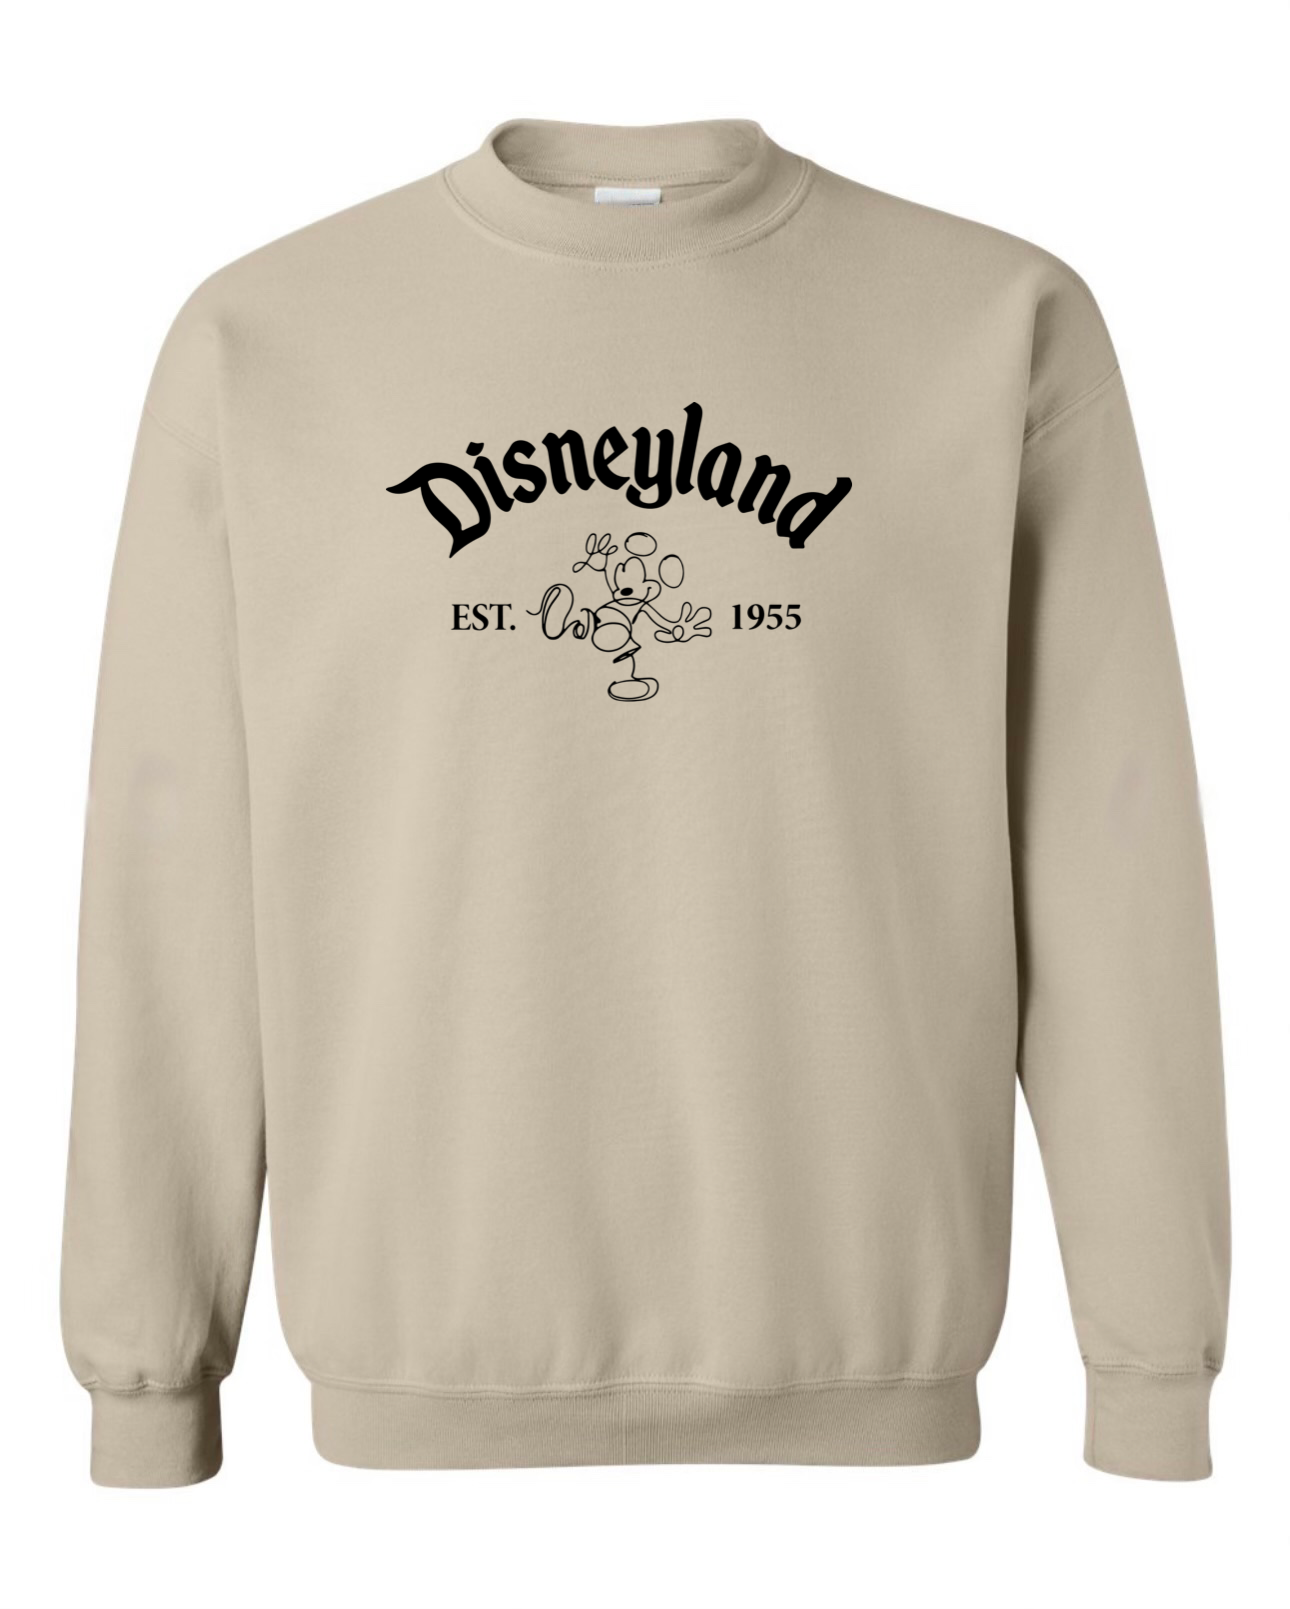 Disneyland 1995 Unisex Crewneck Sweater (Sand)